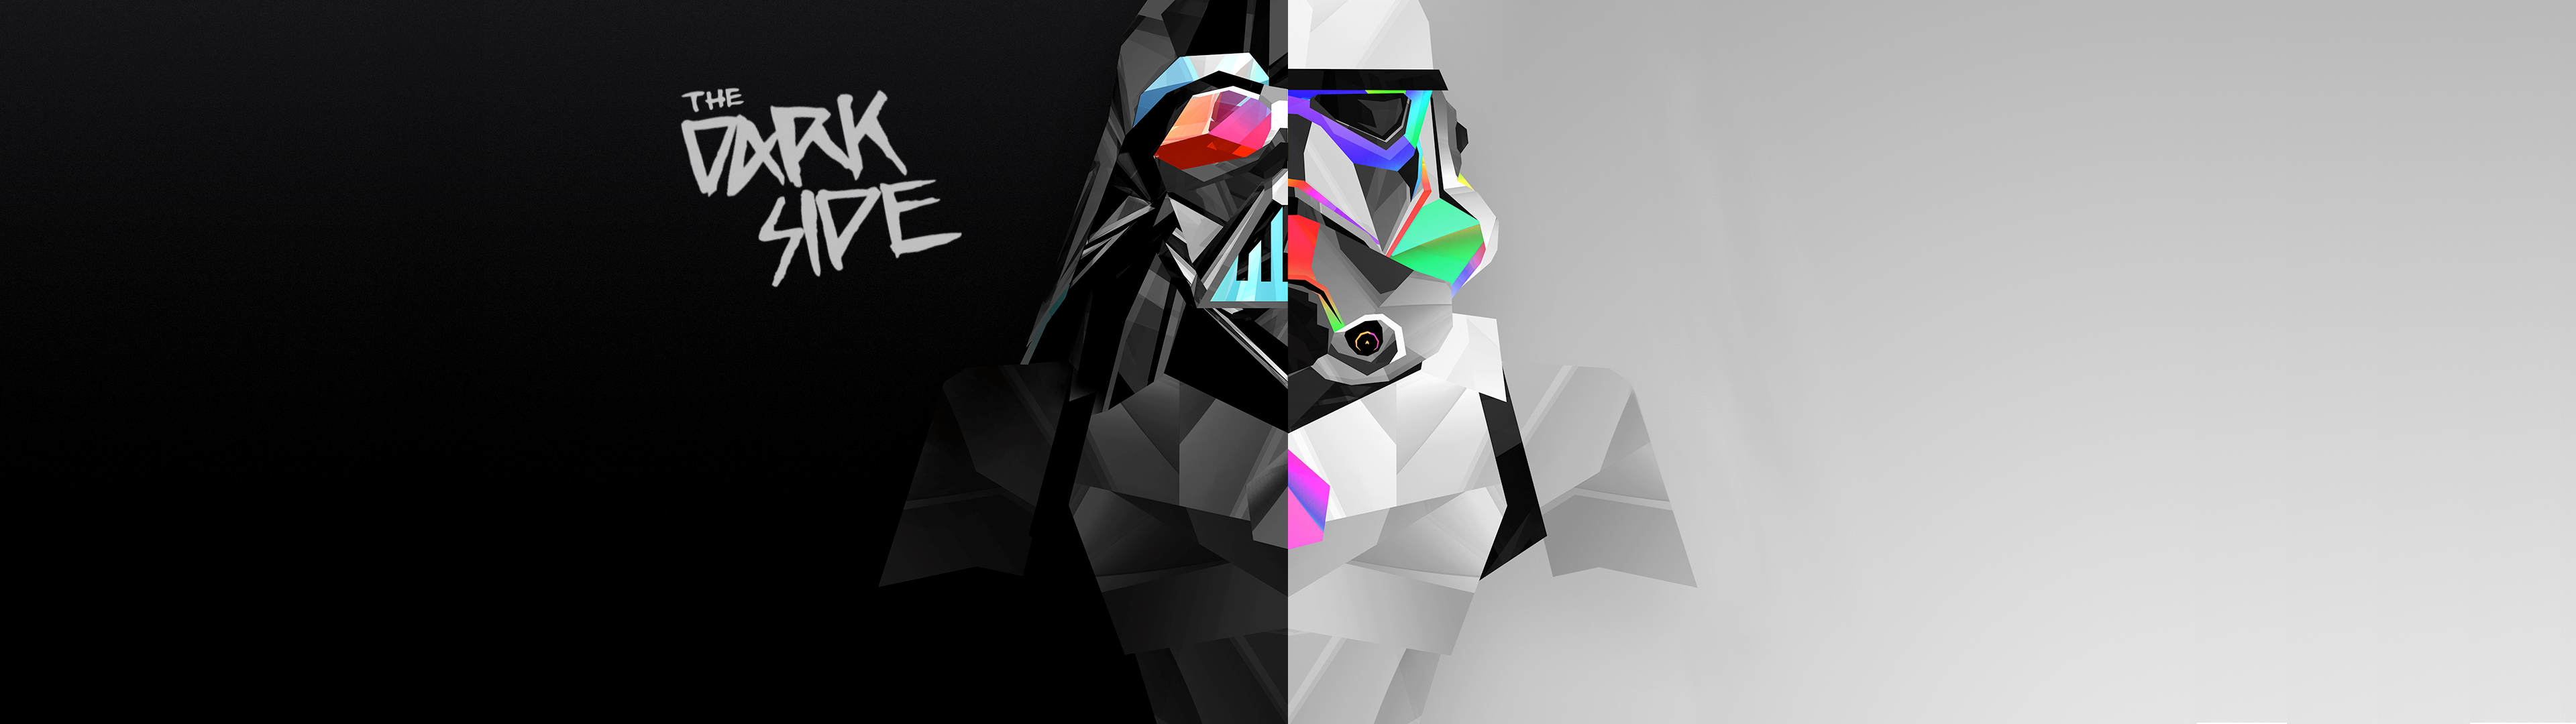 Multiple Display Dual Monitors Abstract Digital Art Stormtrooper Darth Vader Dark Side Star Wars Sta 3840x1080